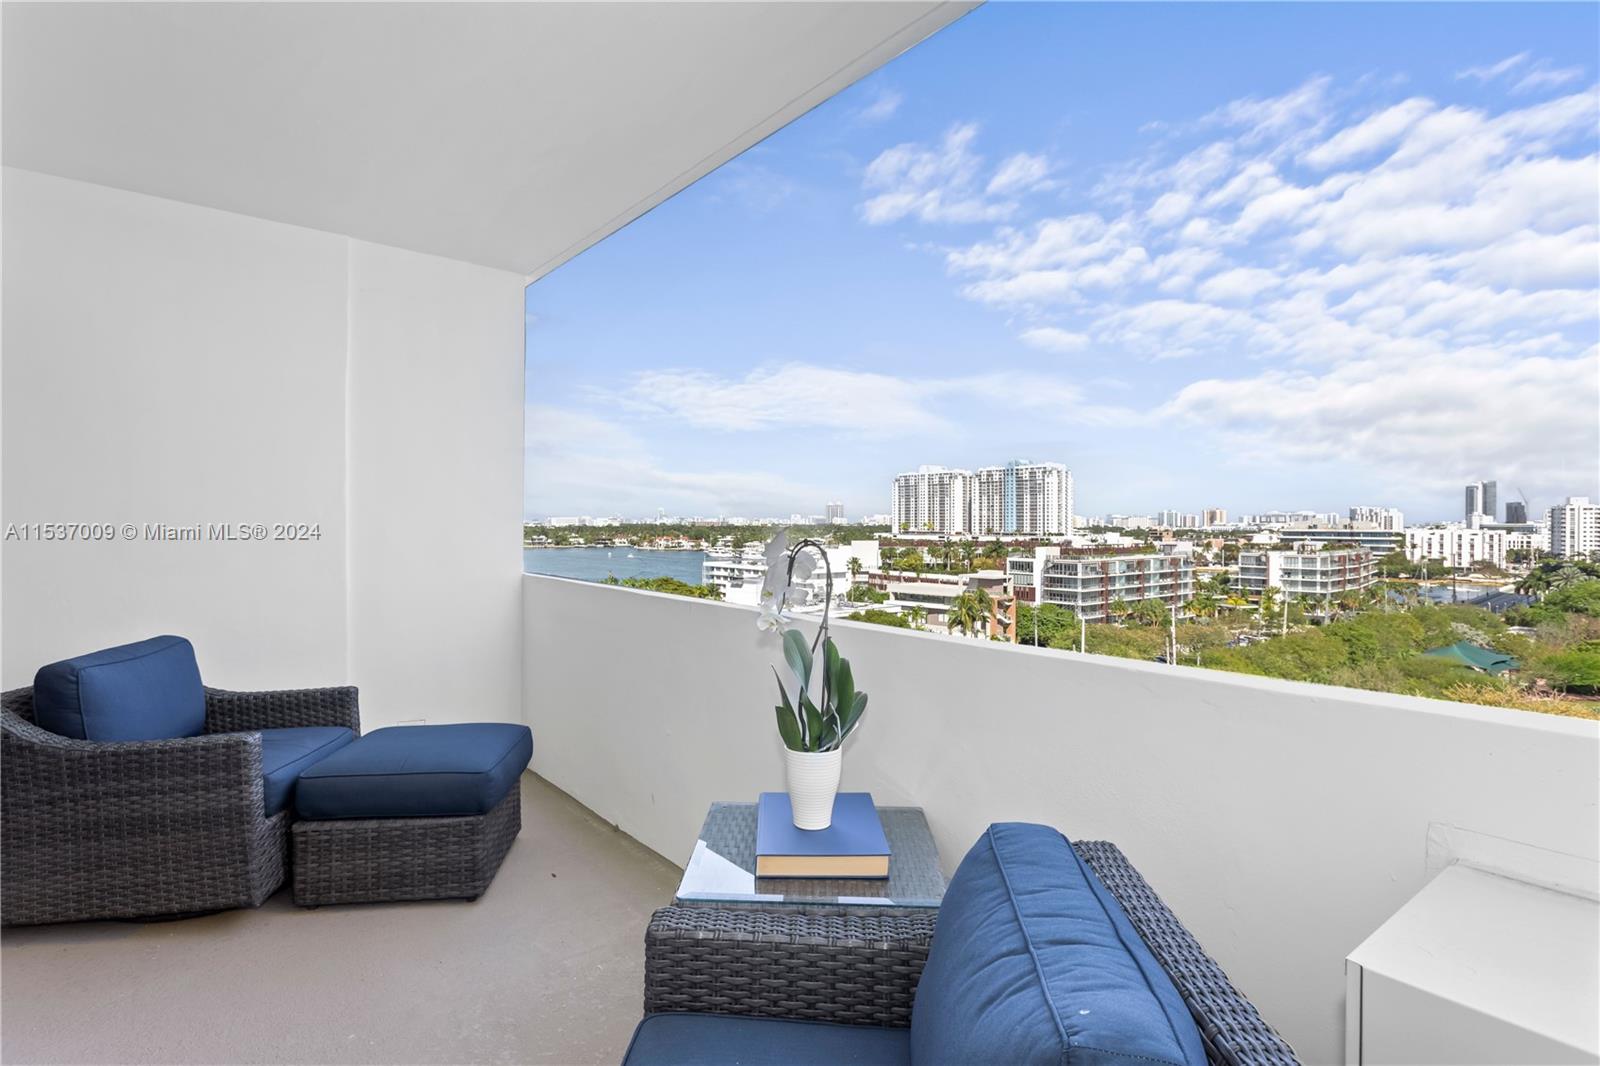 Property for Sale at 3 Island Ave 10K, Miami Beach, Miami-Dade County, Florida - Bedrooms: 1 
Bathrooms: 1  - $605,000